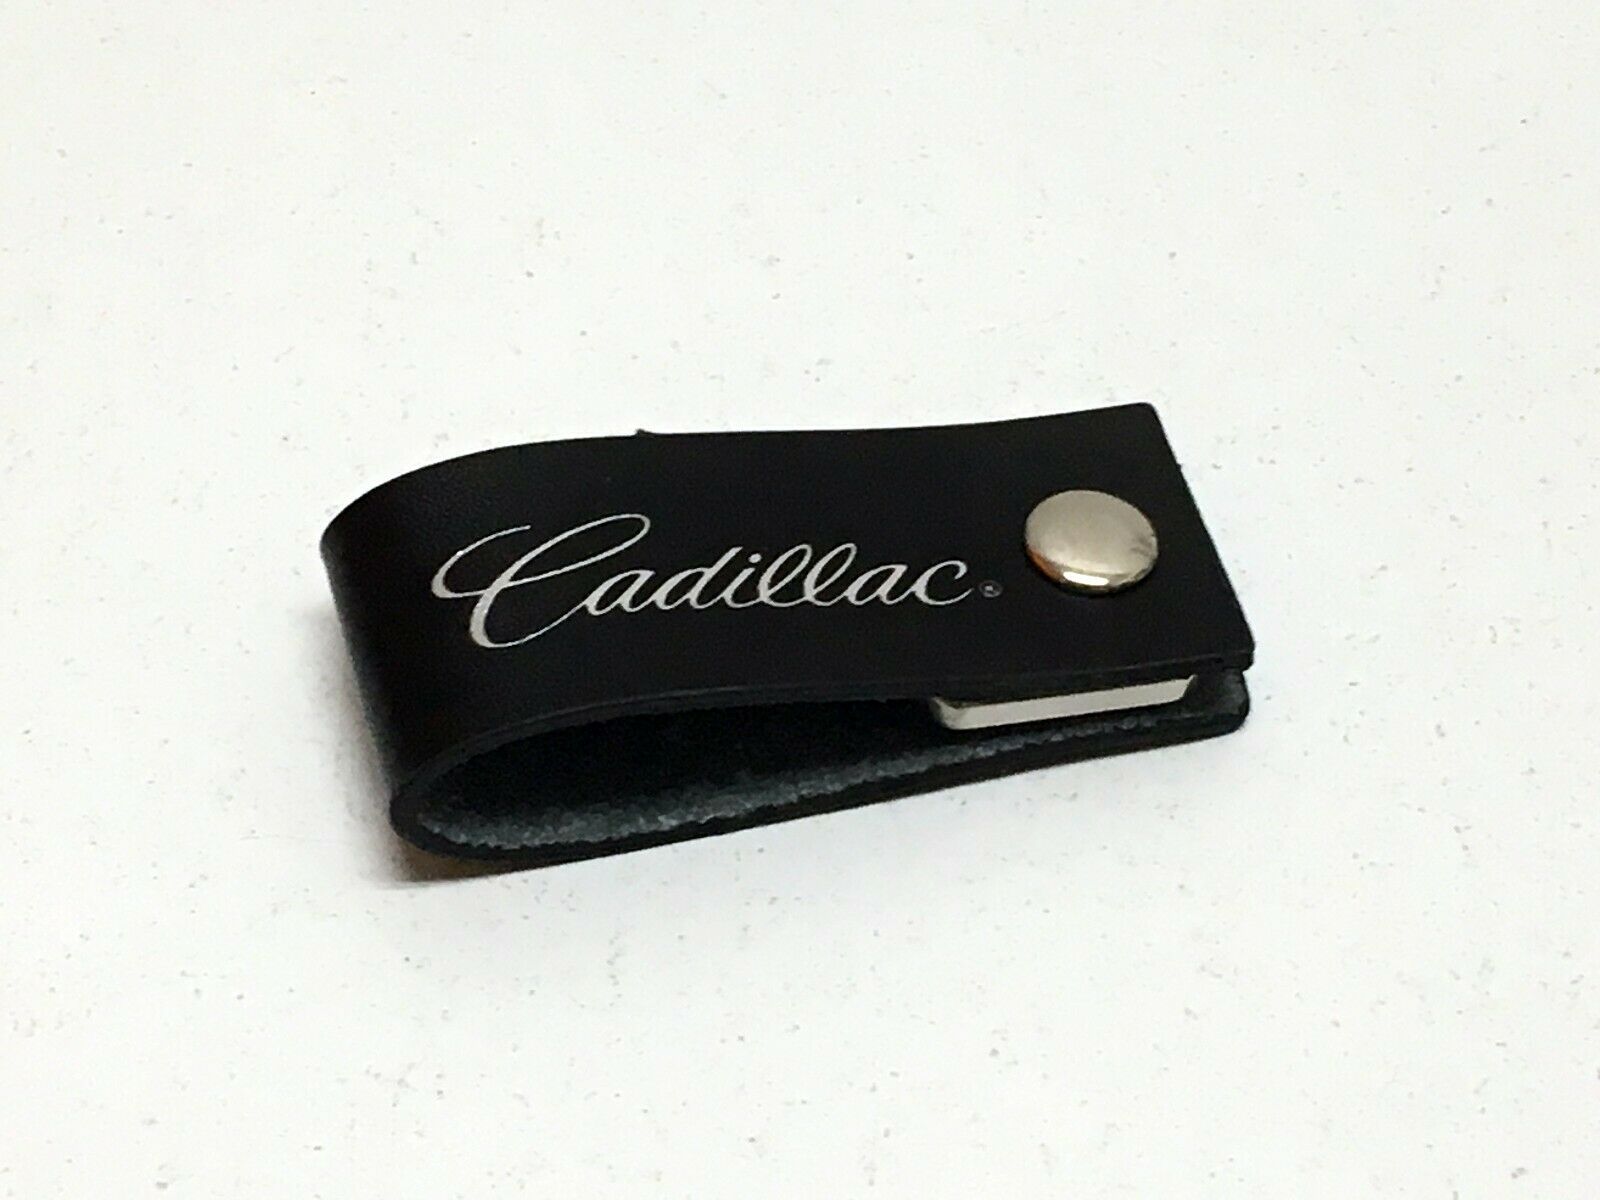 2015 Cadillac ATS Coupe Press Kit USB Brochure